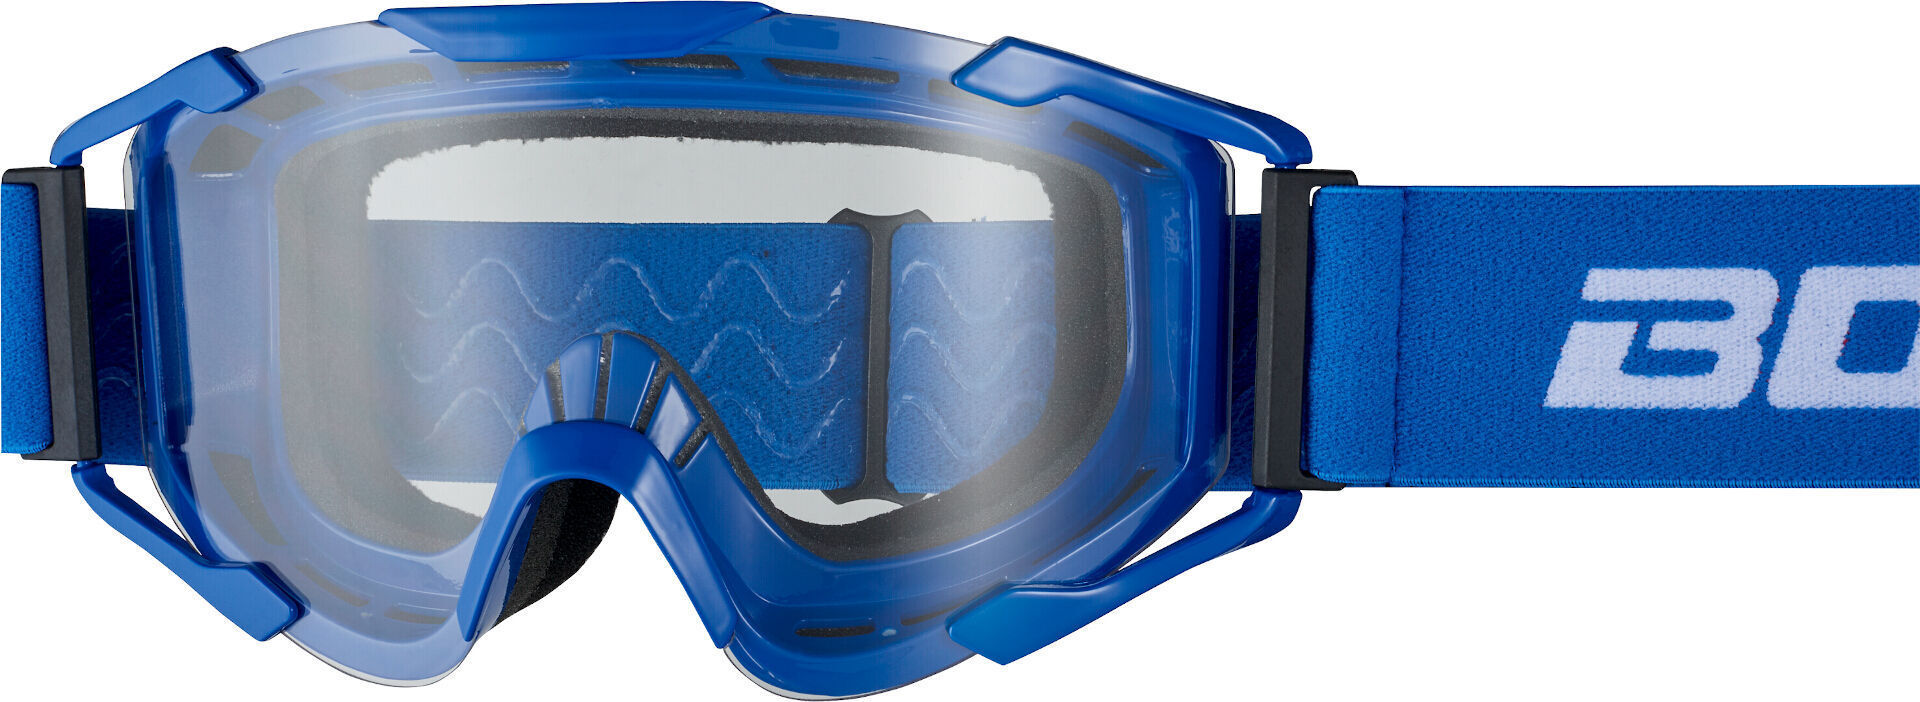 Bogotto B-St Motocross Goggles  - White Blue